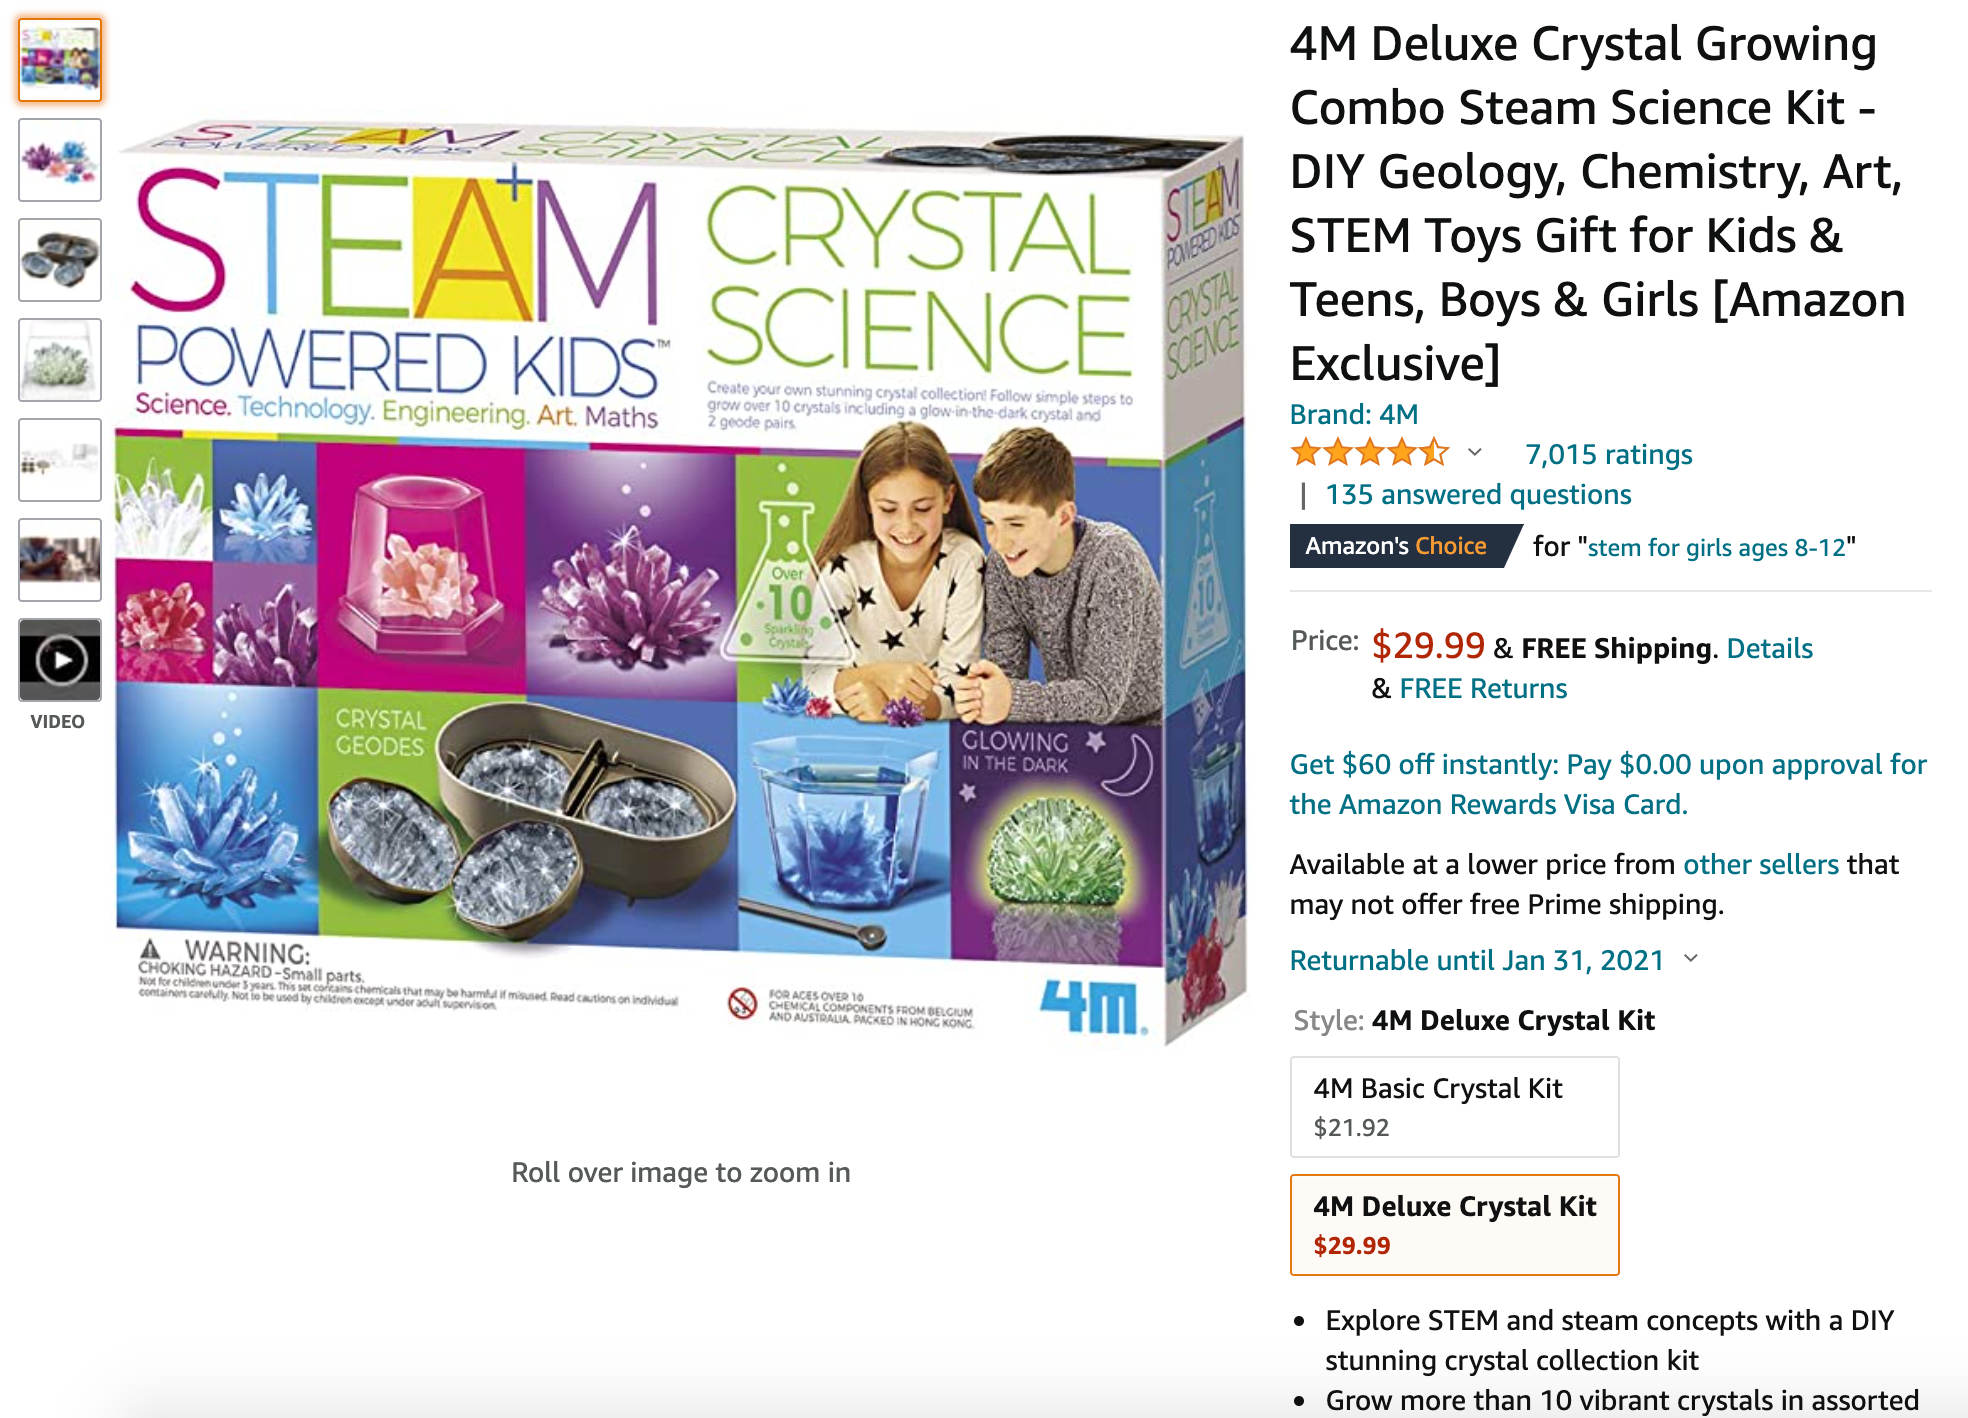 4M Deluxe Crystal Growing Combo Steam Science Kit - DIY Geology, Chemistry, Art, STEM Toys Gift for Kids.jpg